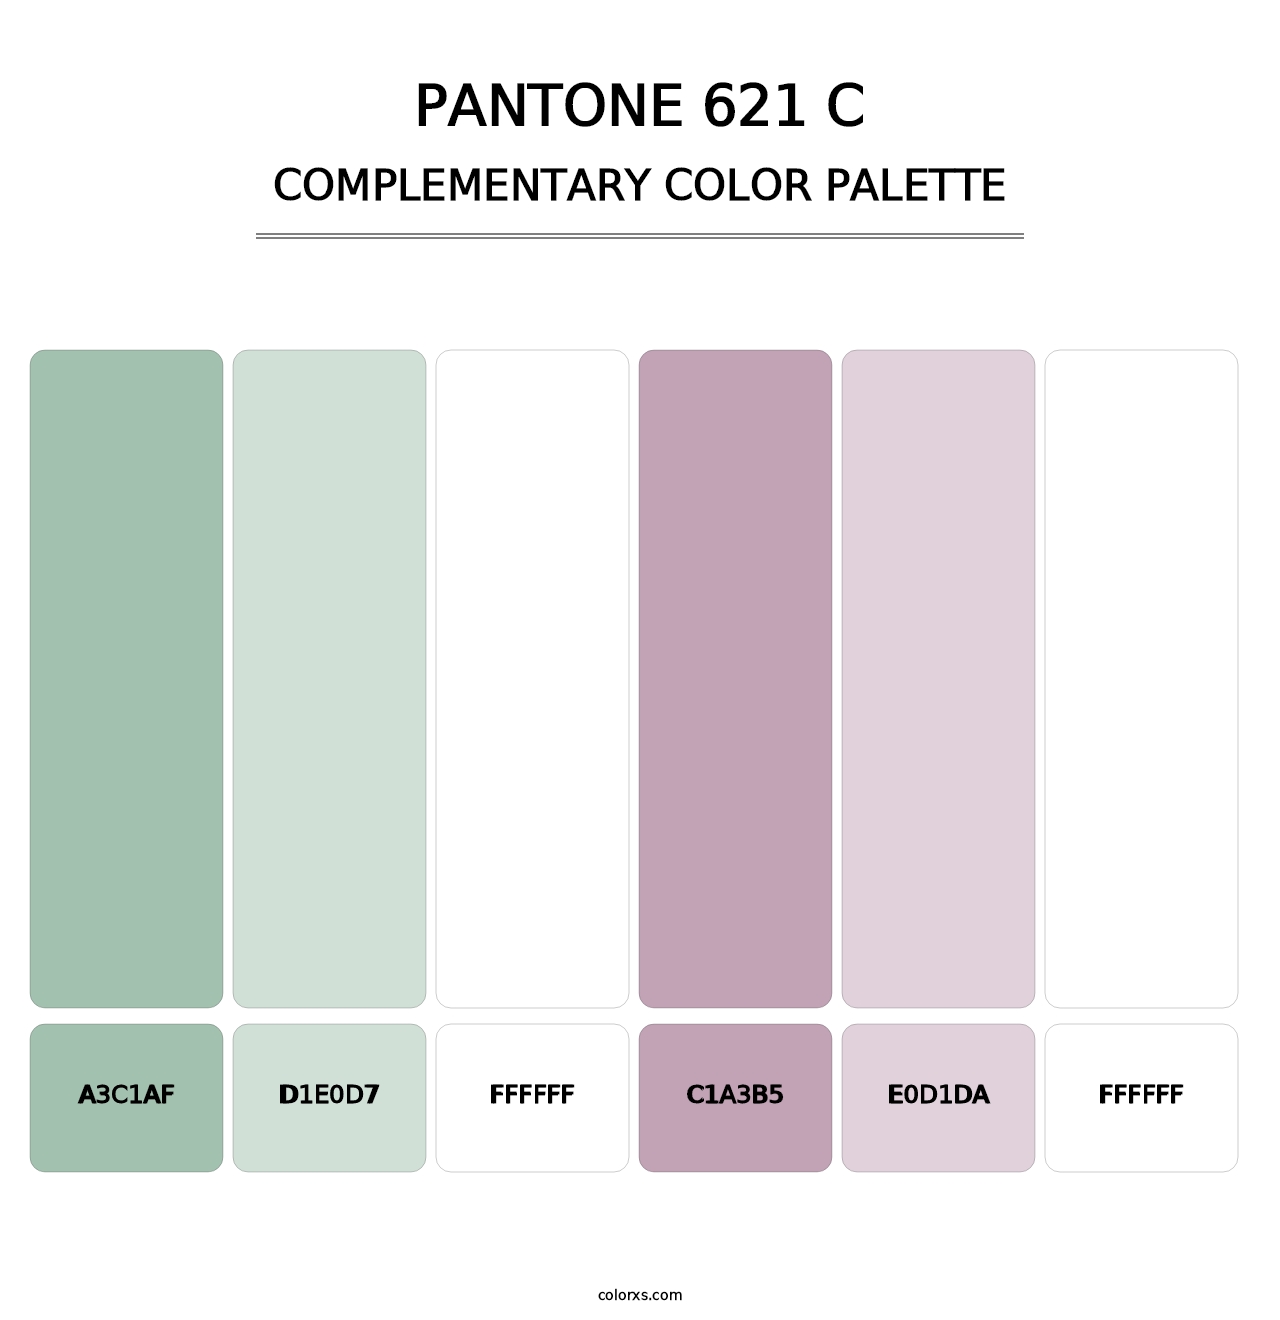 PANTONE 621 C - Complementary Color Palette